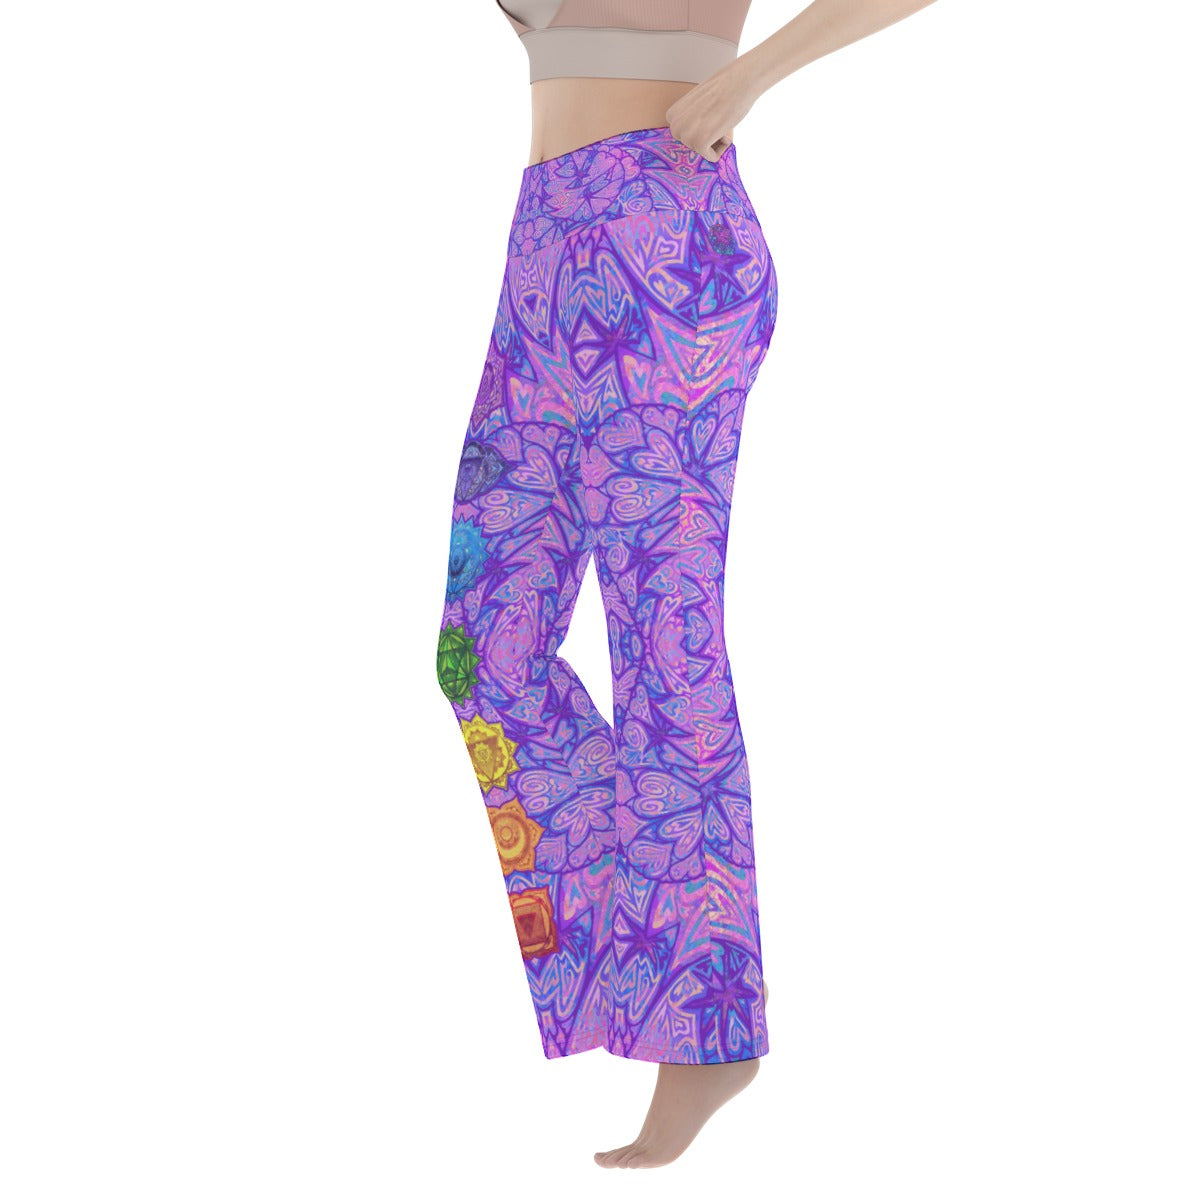 mishogawear Chakra Love Yoga Pants - Hand Painted and Batiked